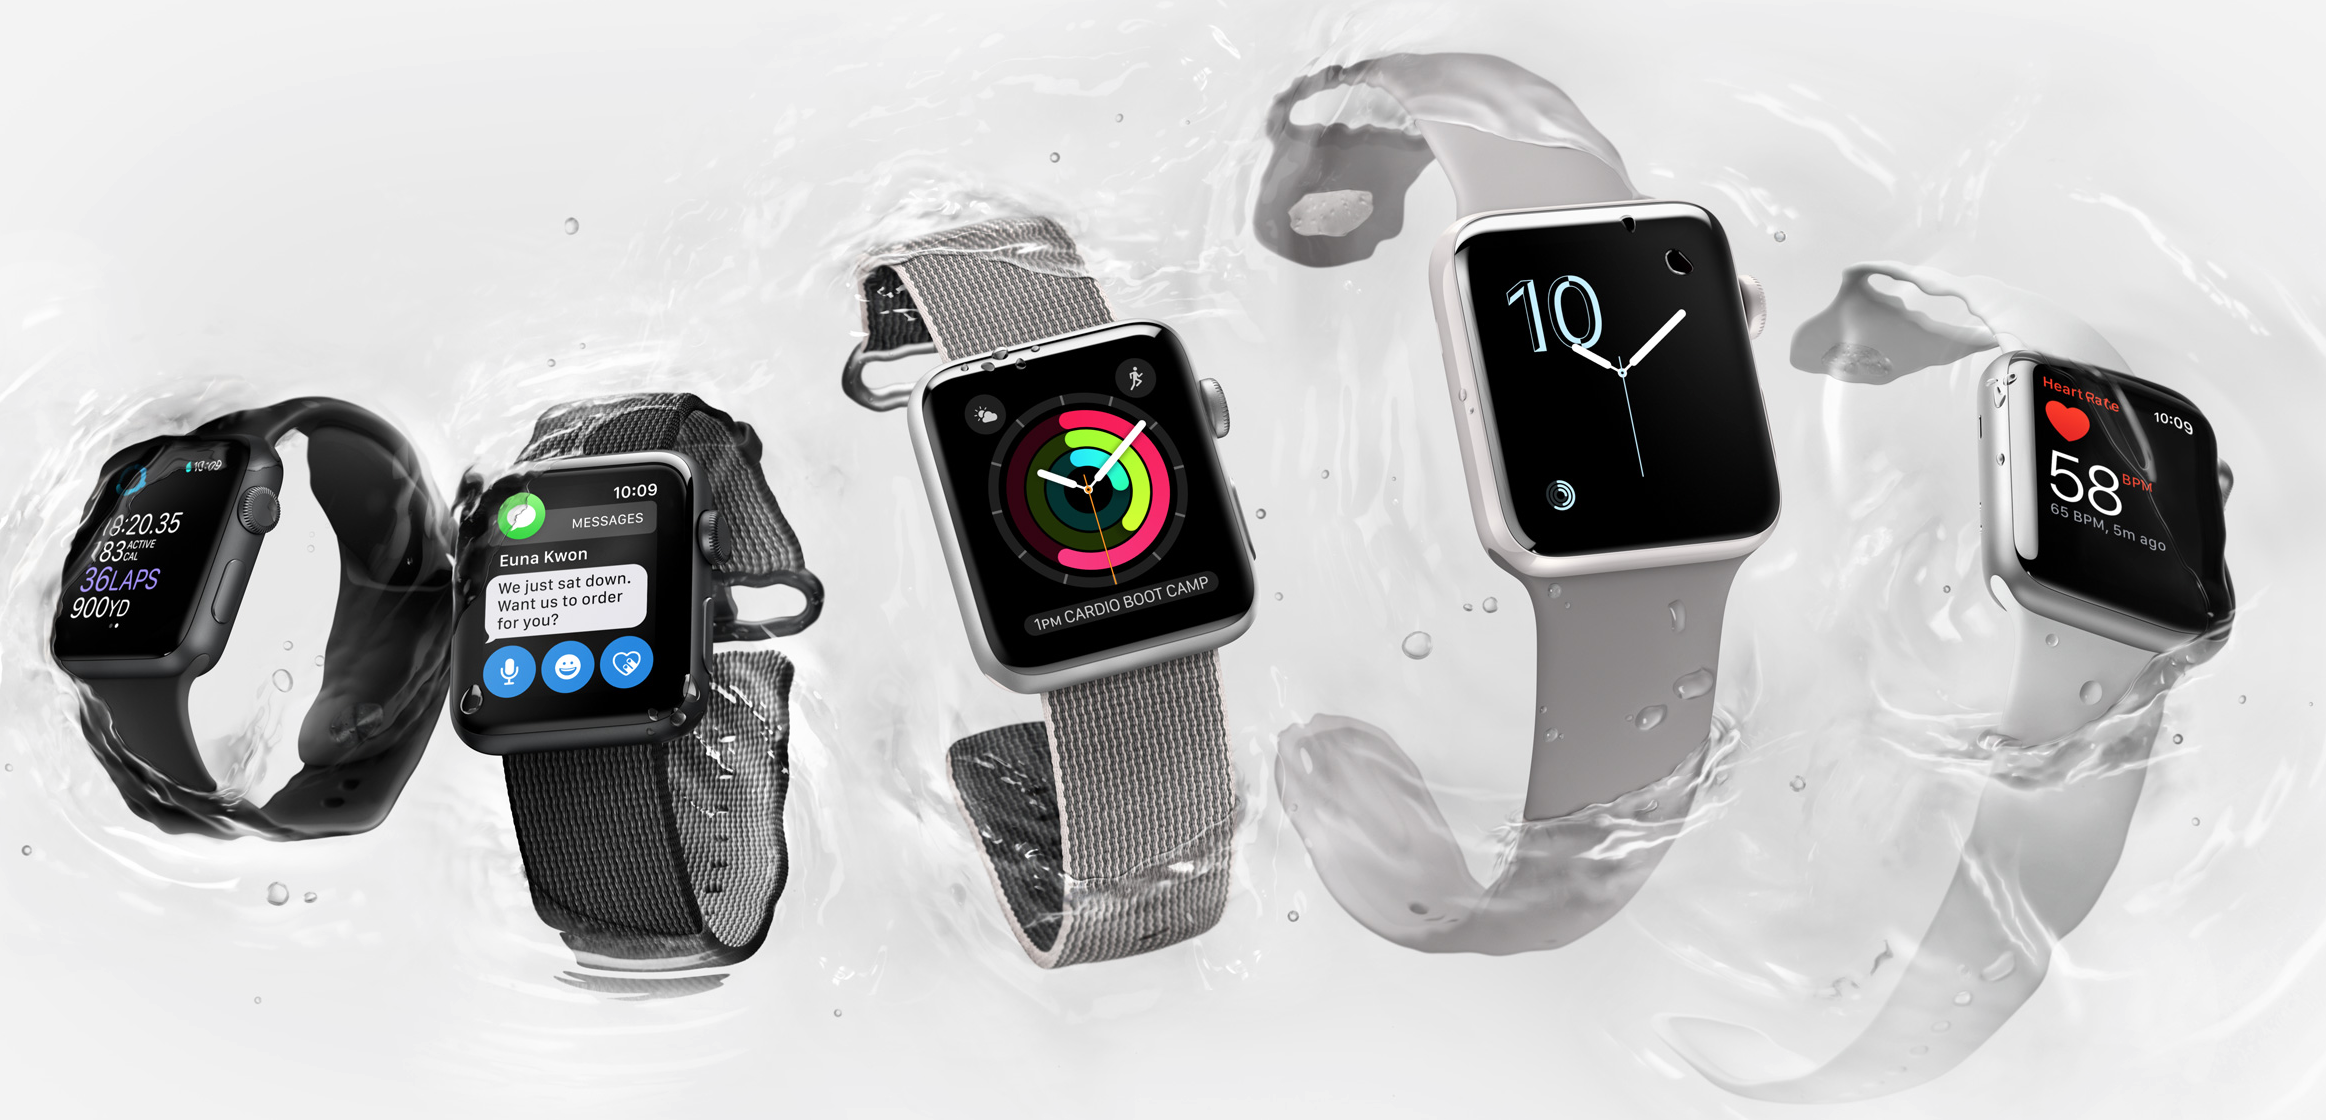 What Has Changed; Wasn't the Apple Watch Waterproof Already?